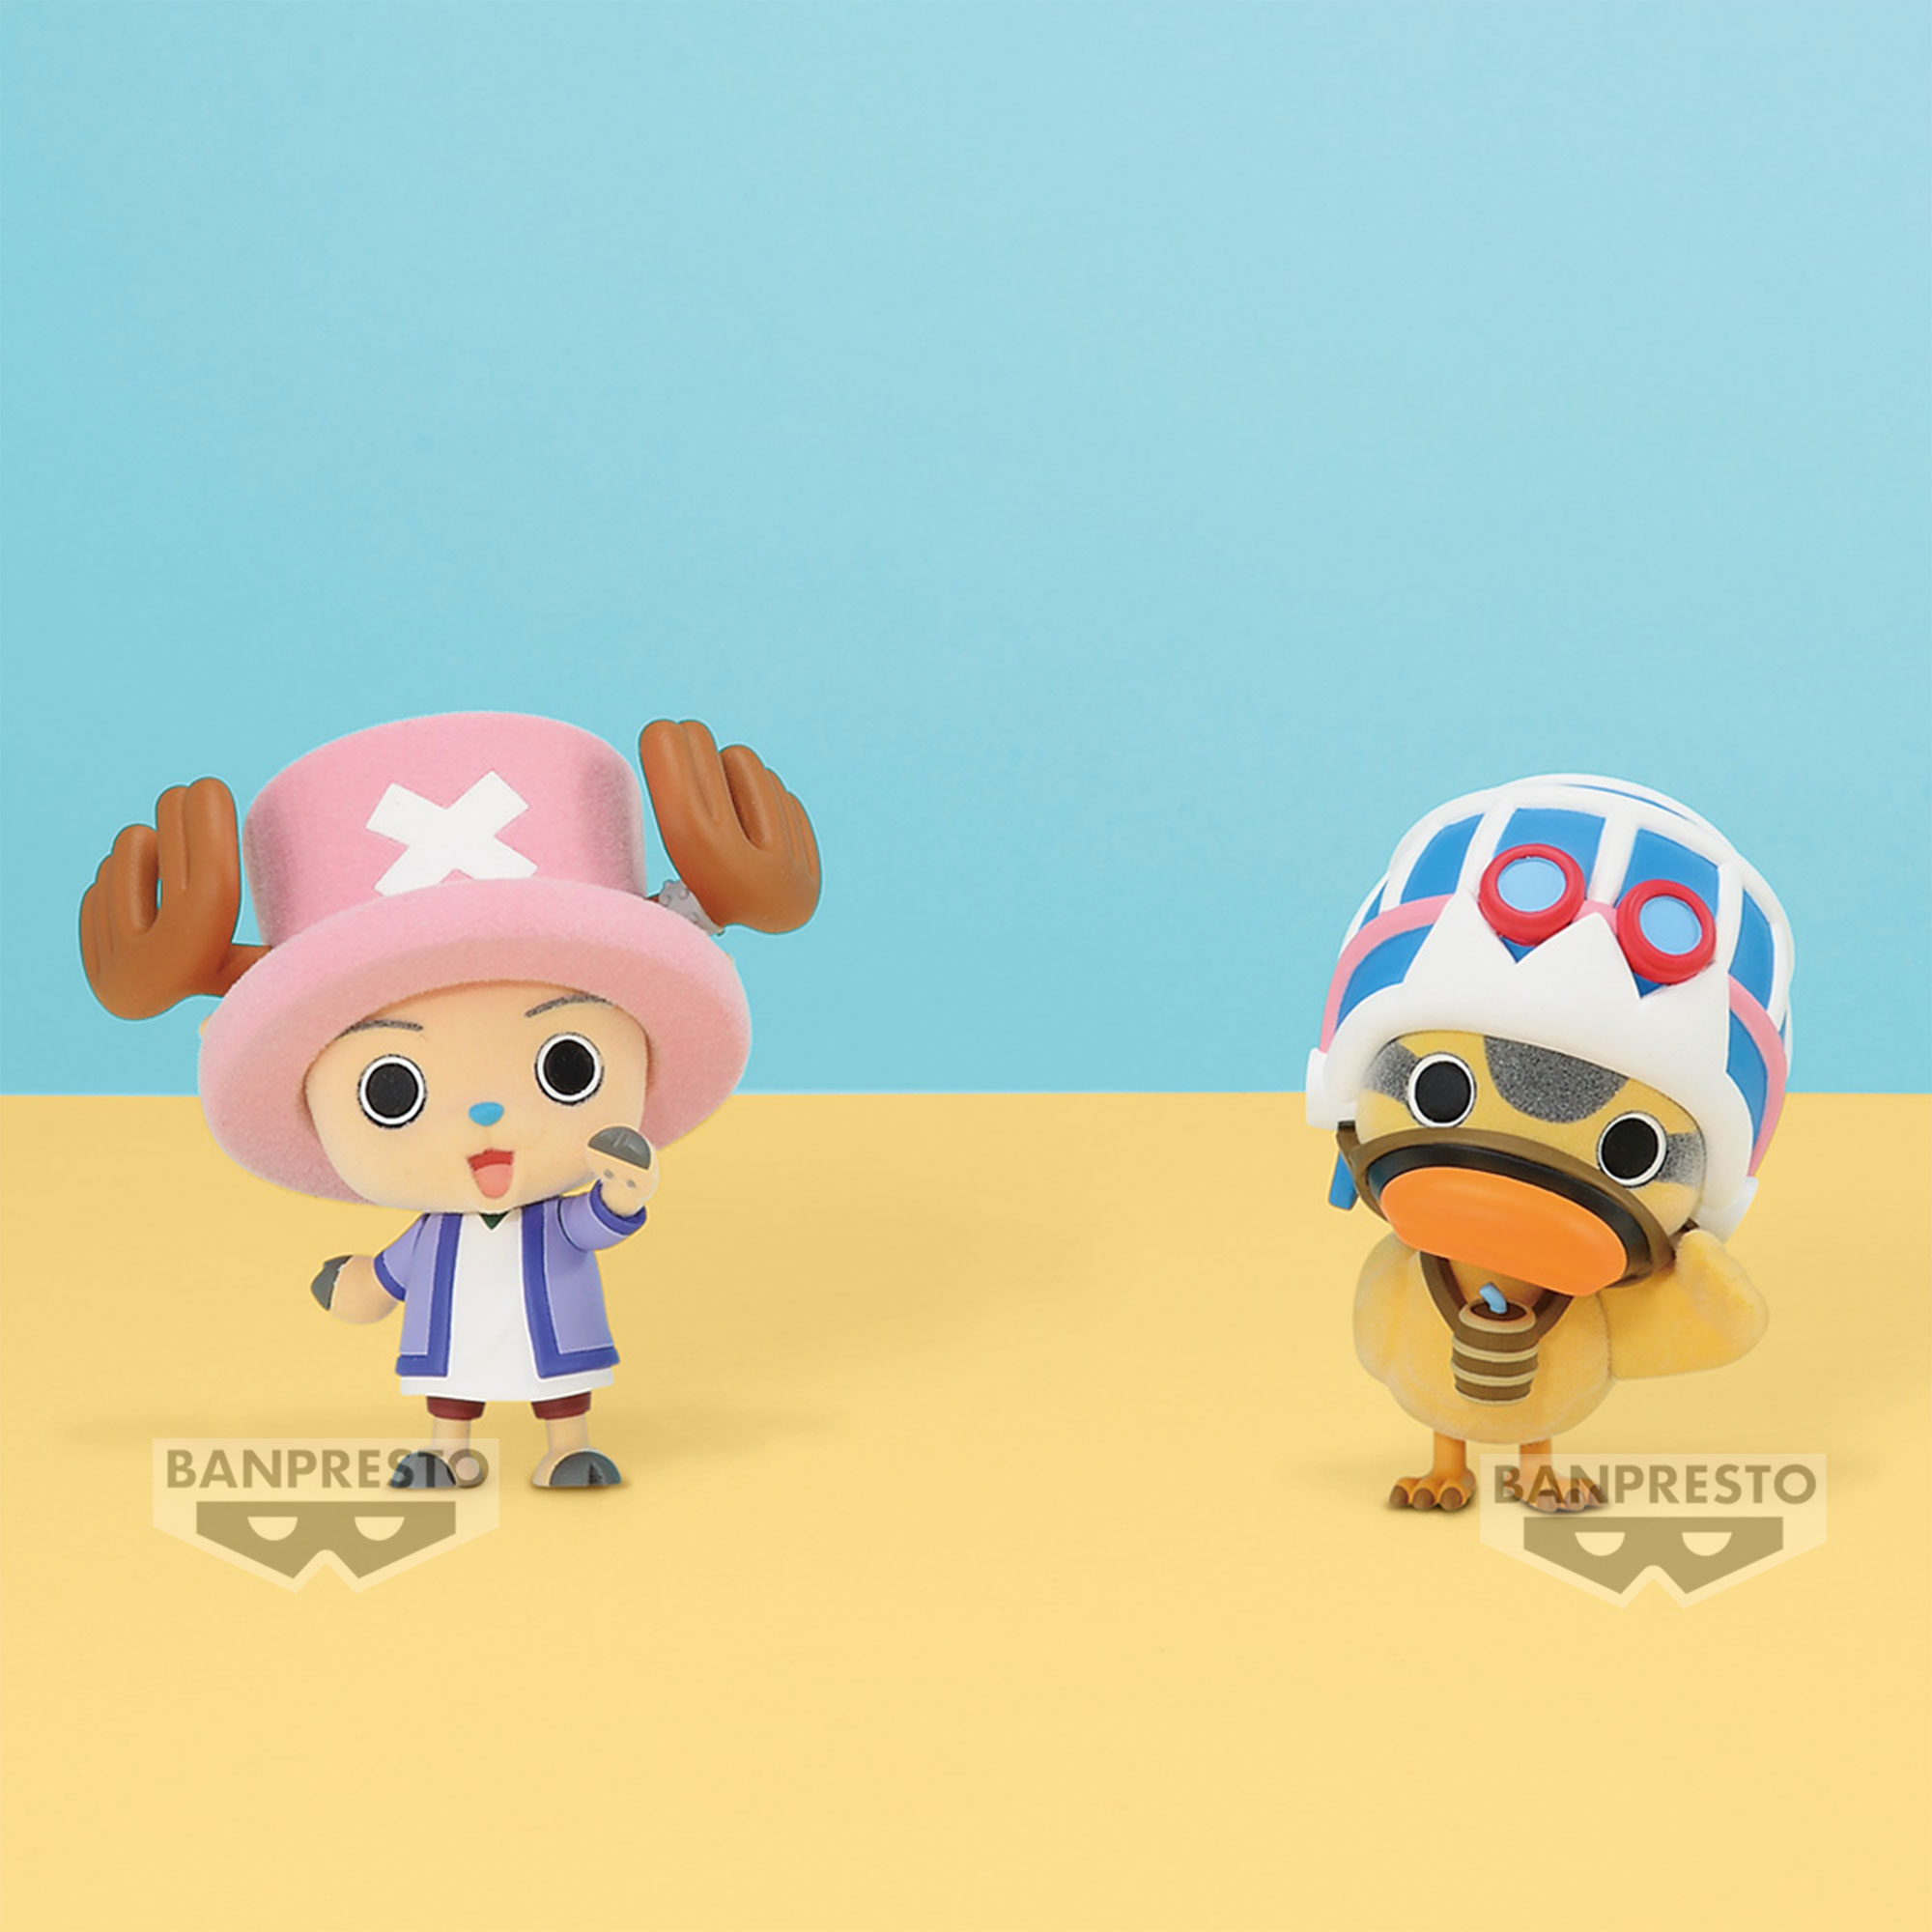 ONE PIECE Fluffy Puffy～CHOPPER & KAROO～(B:KAROO)